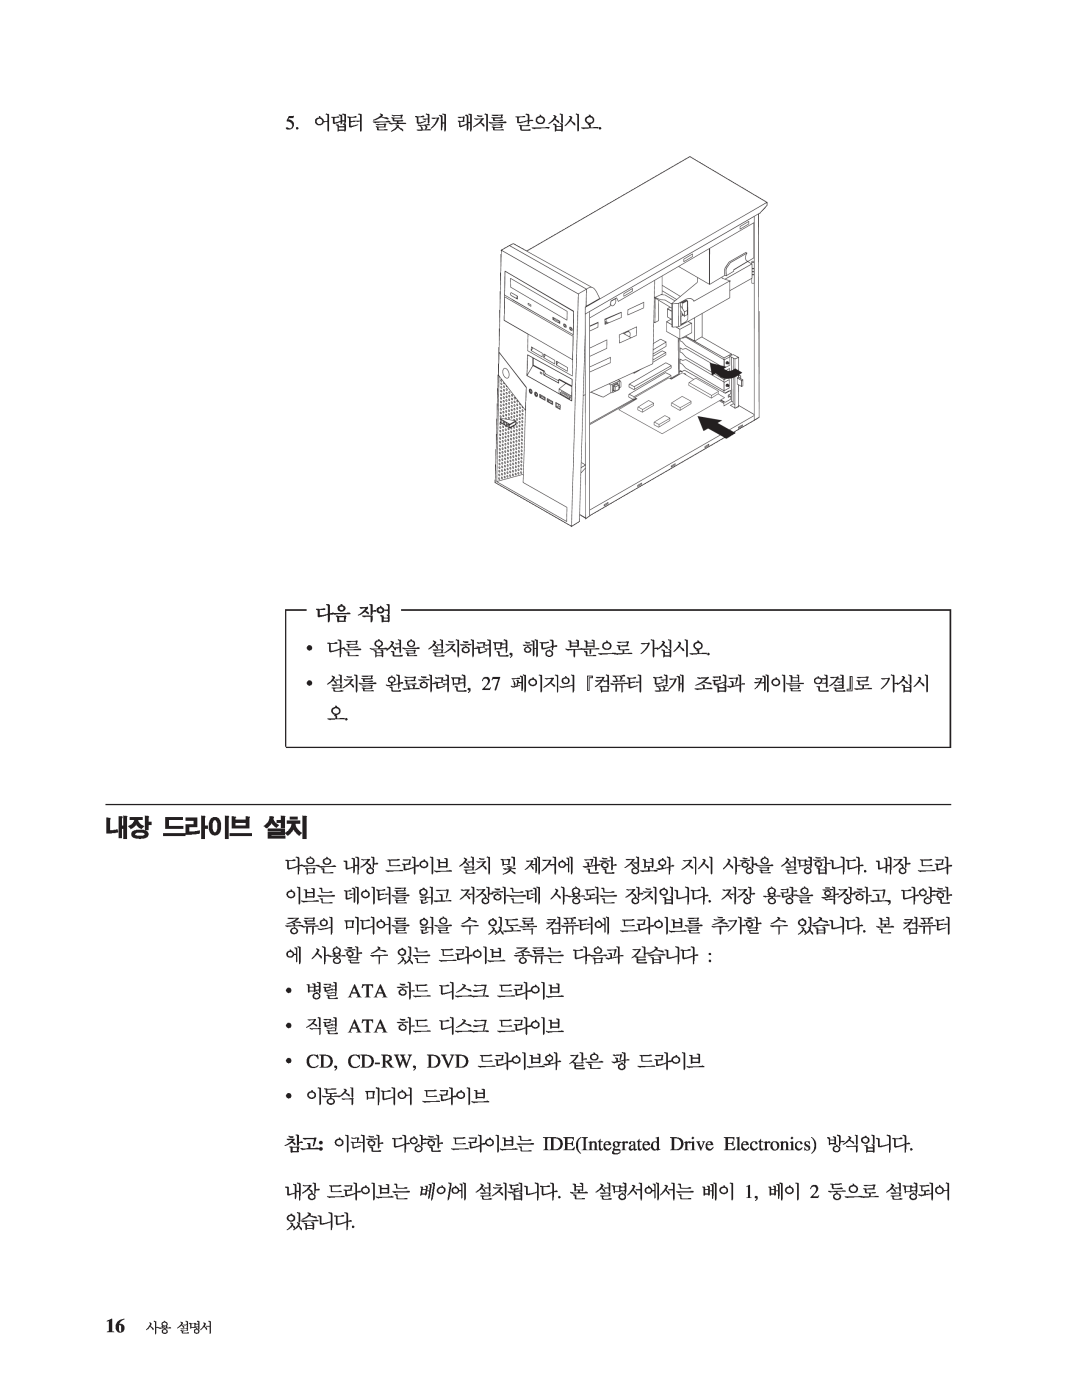 IBM 8143 manual v ATA v ATA, v CD, CD-RW, DVD, IDEIntegrated Drive Electronics 